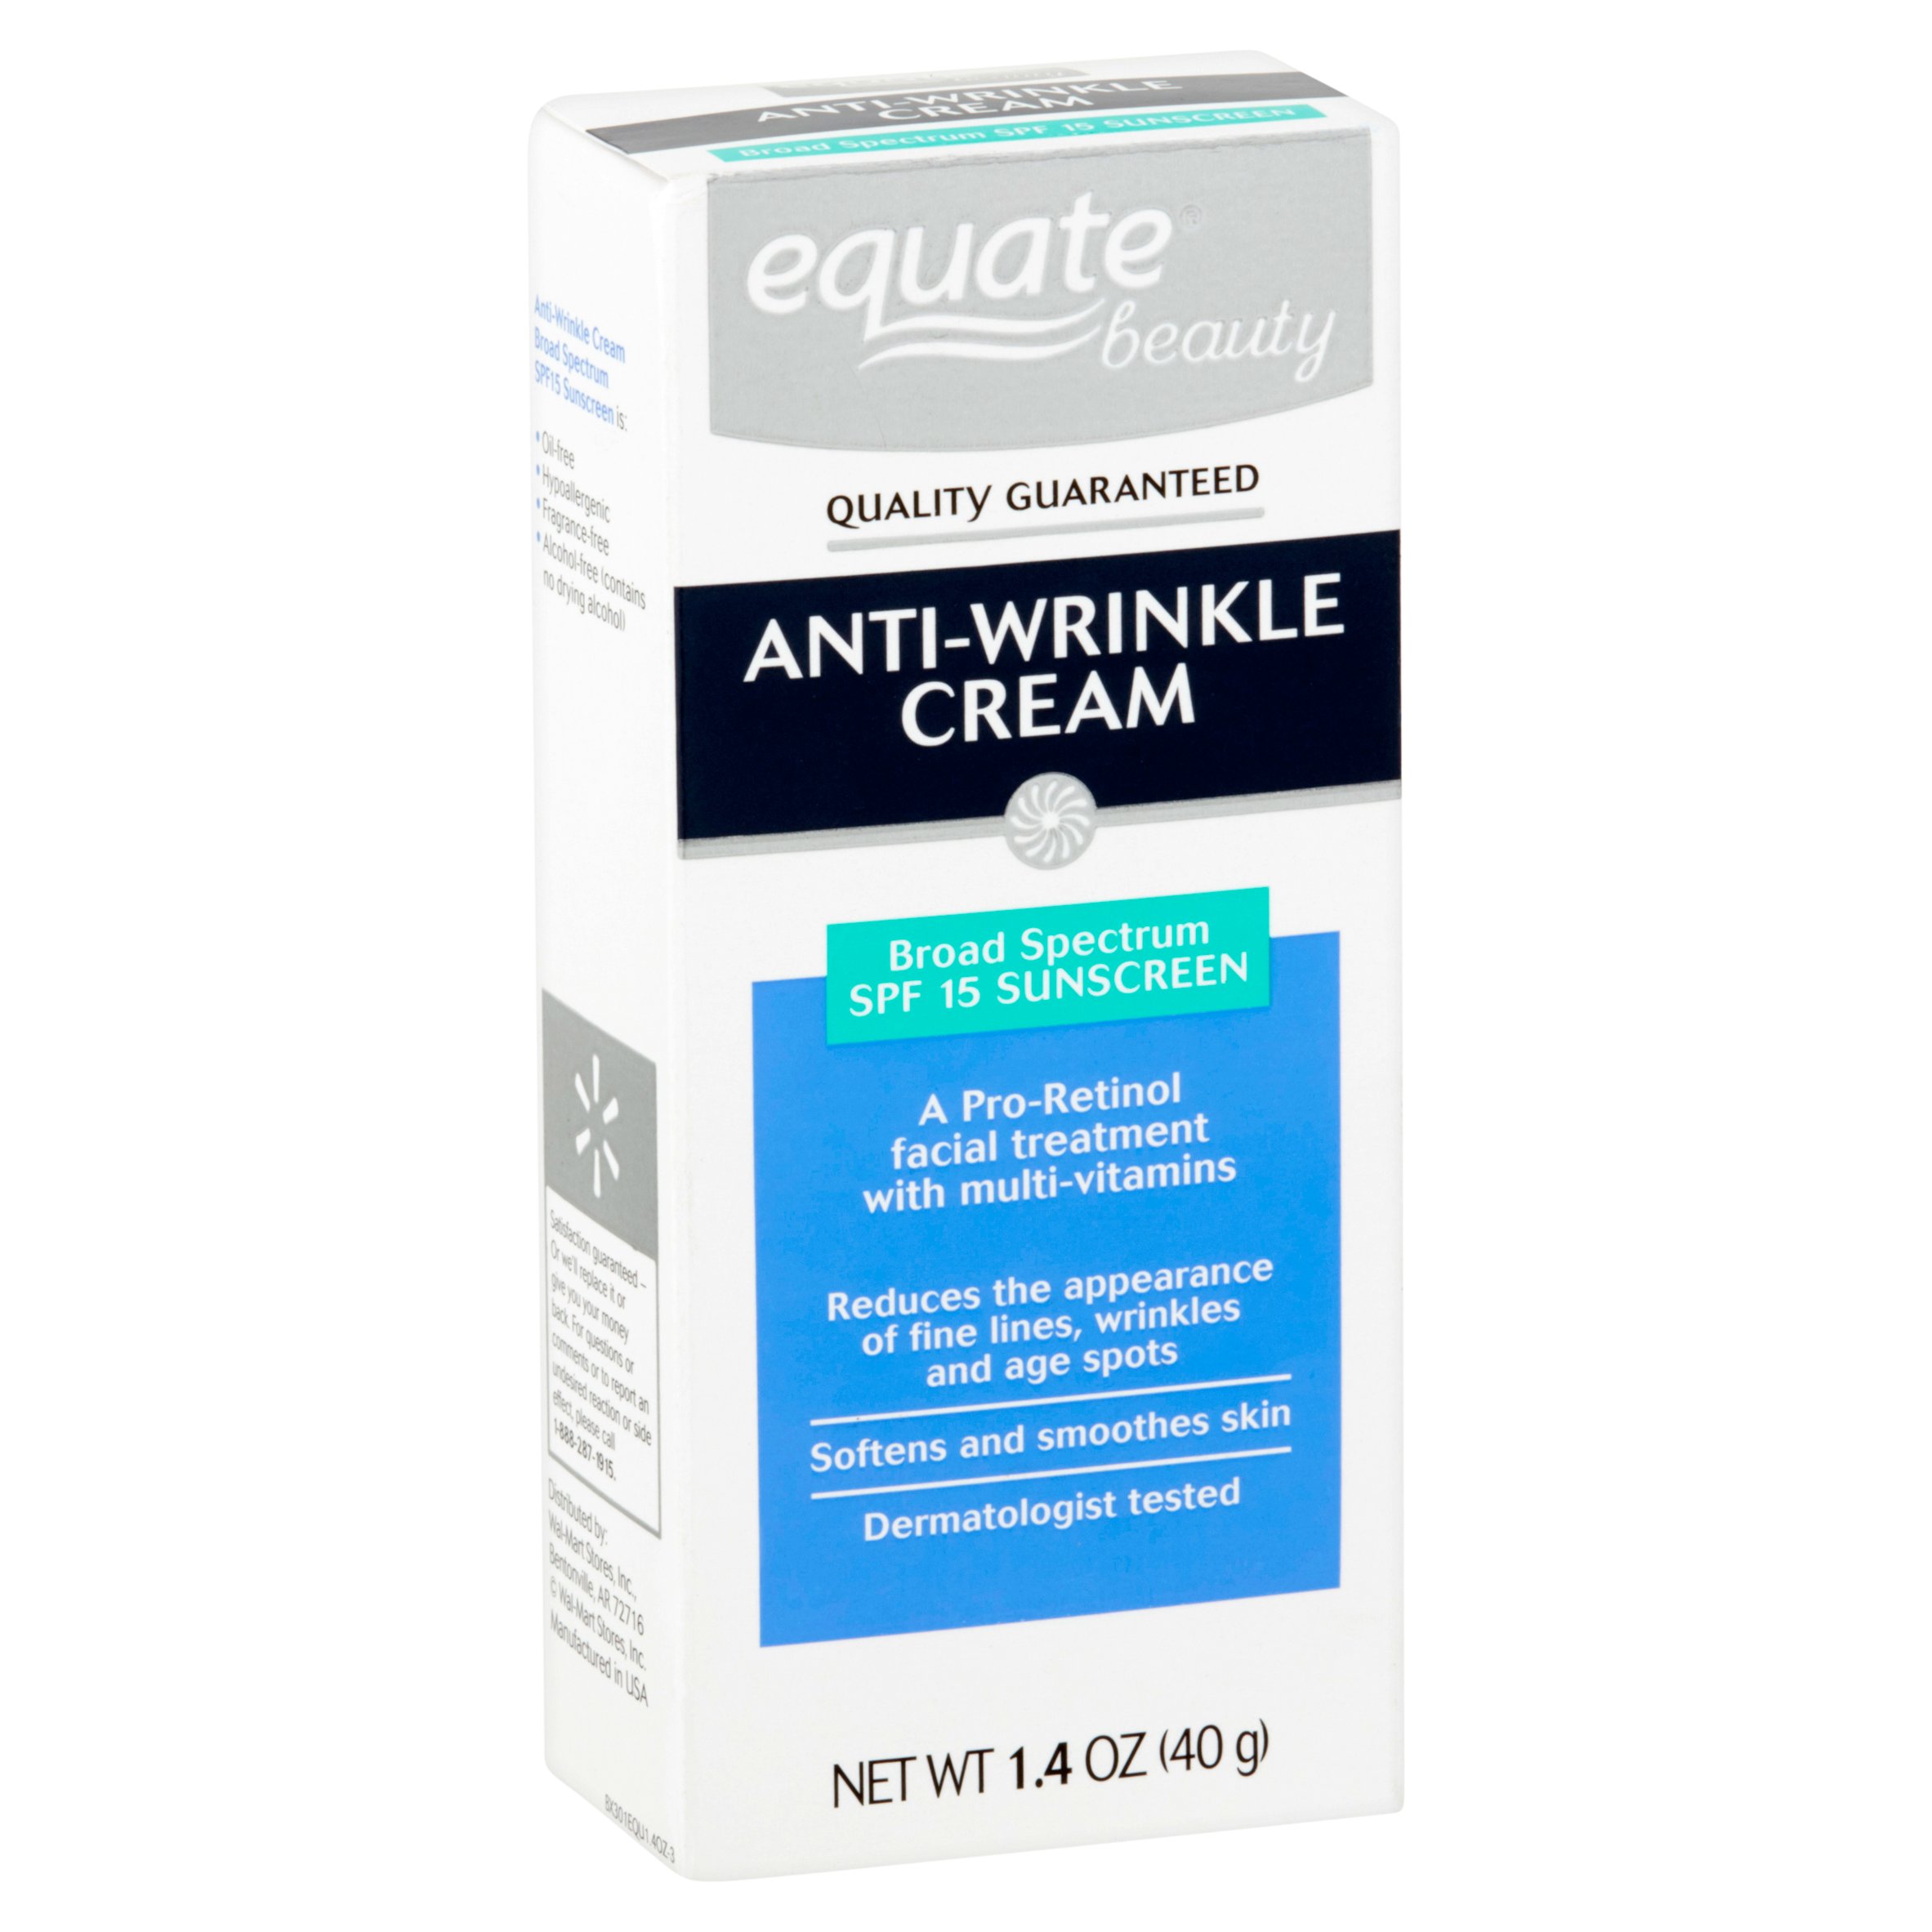 Equate Anti-Wrinkle Cream, SPF 15, 1.4 Oz. - image 2 of 5